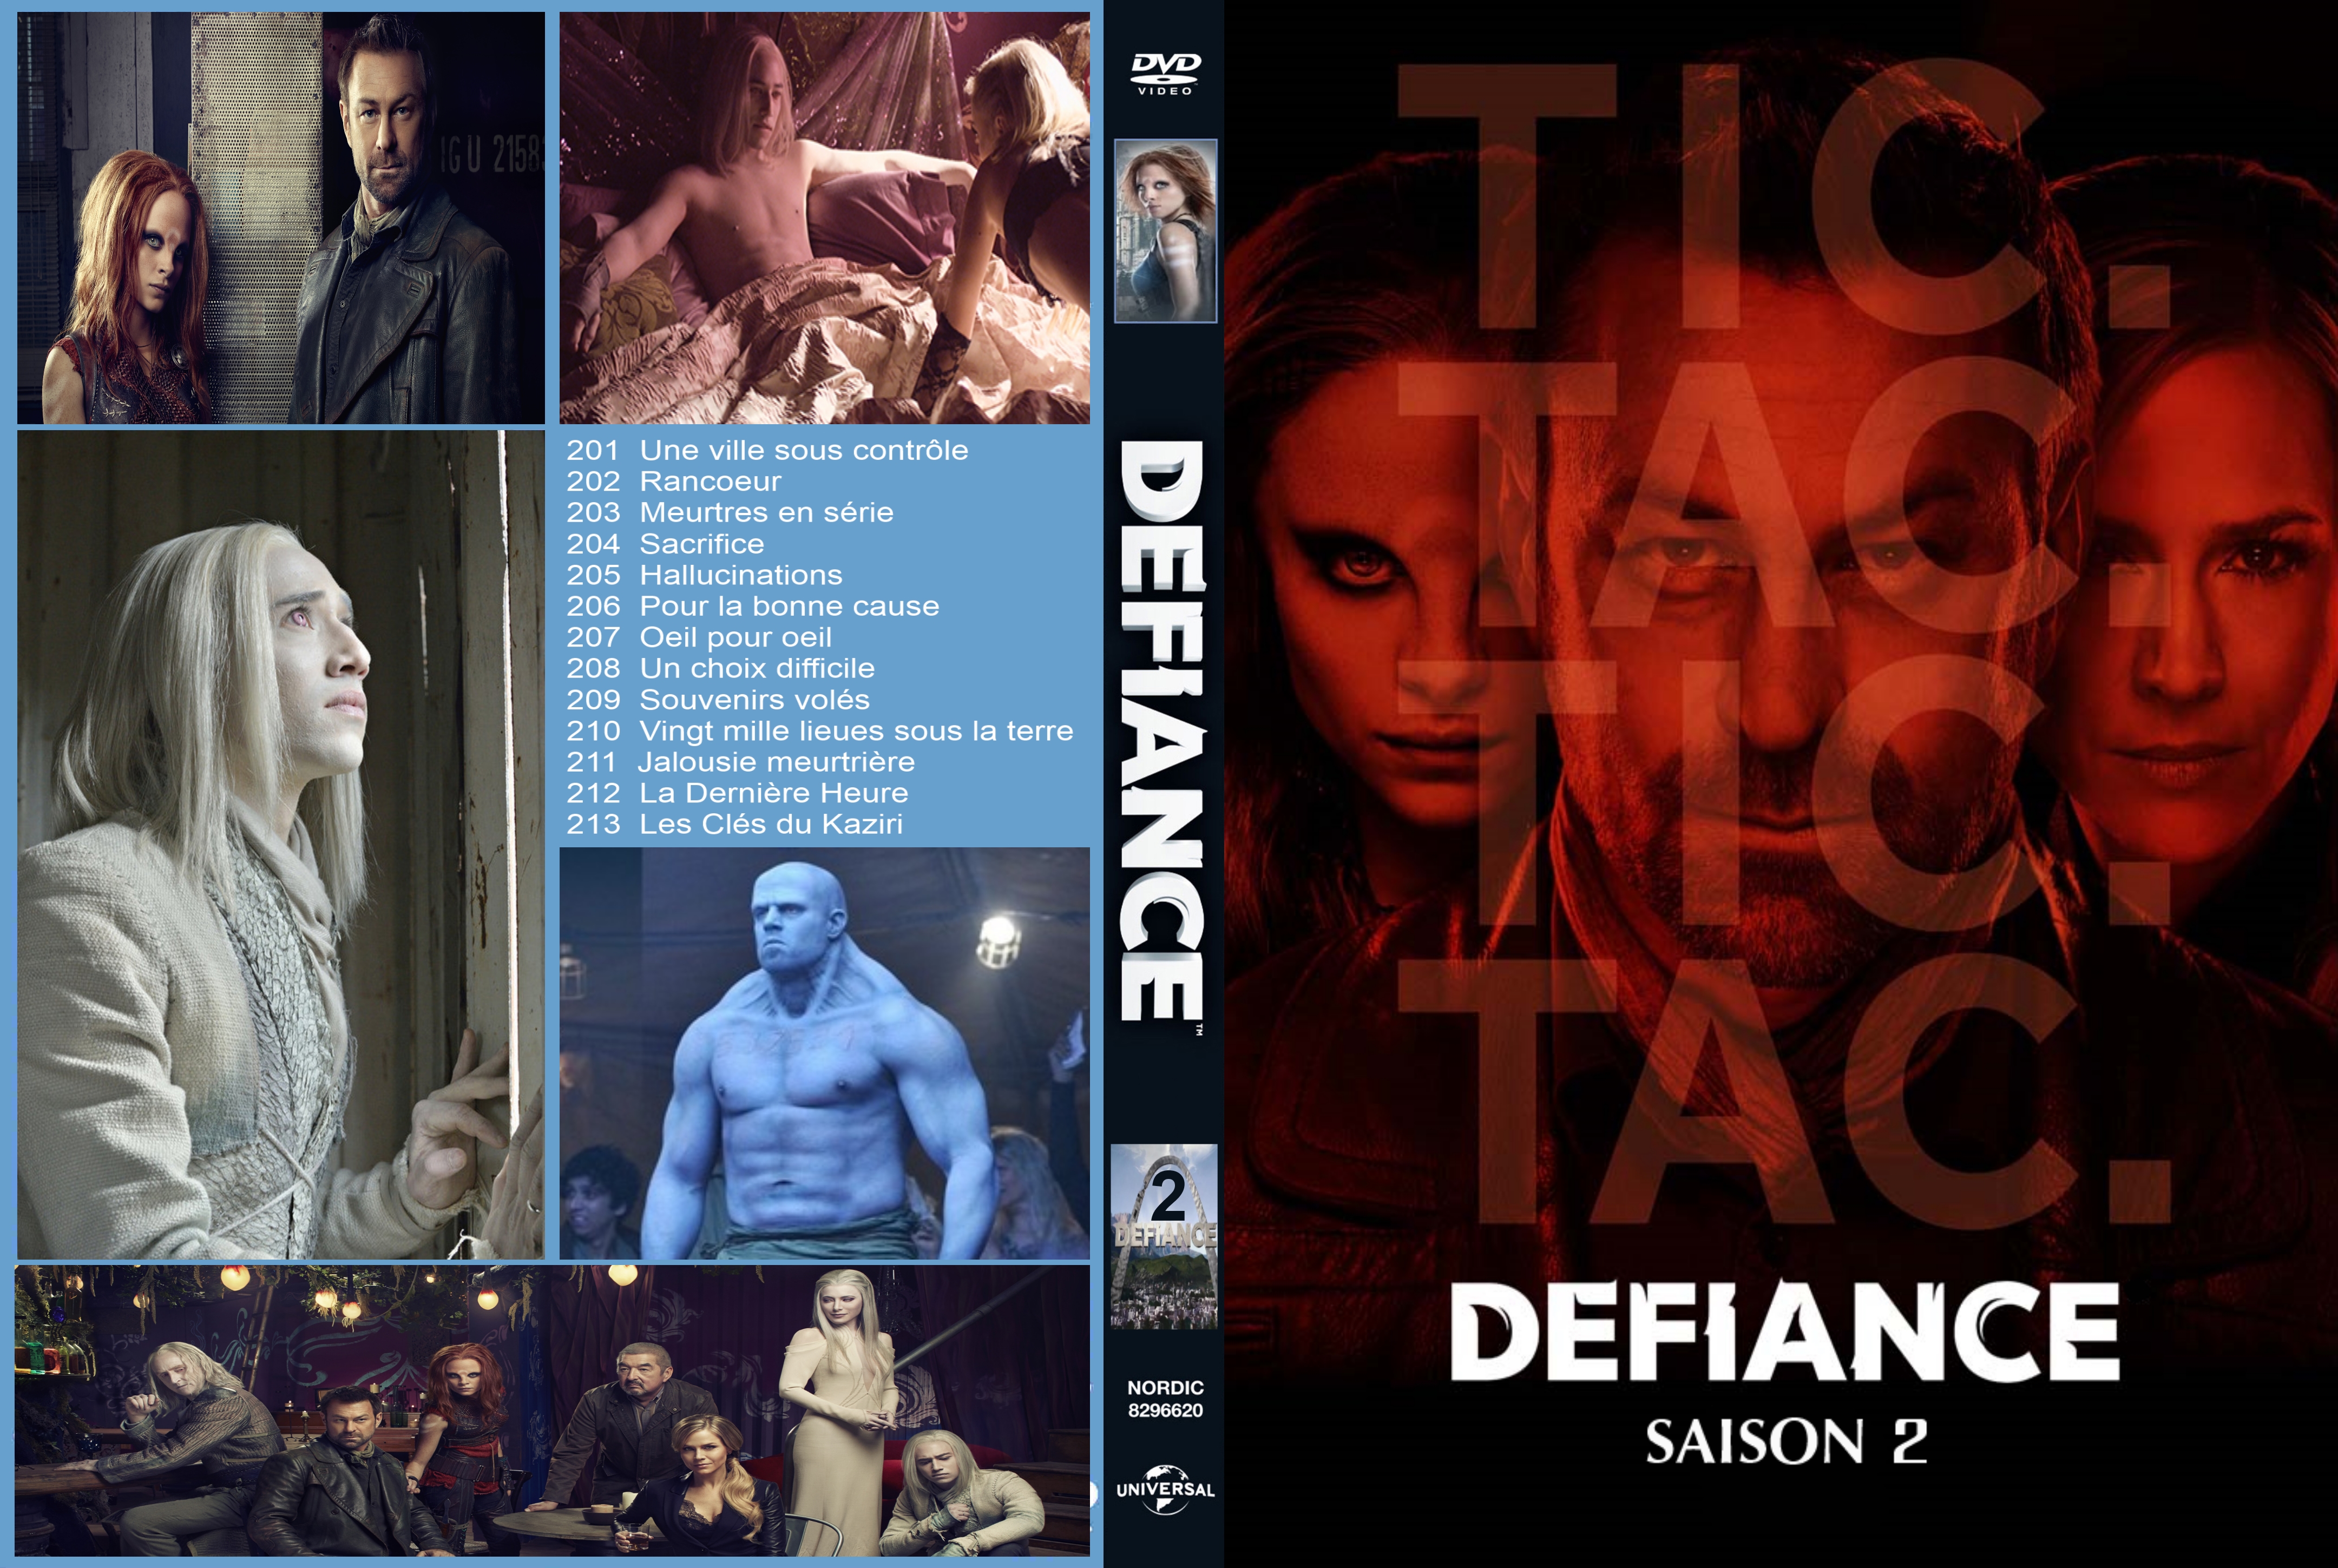 Jaquette DVD Defiance Saison 2 custom